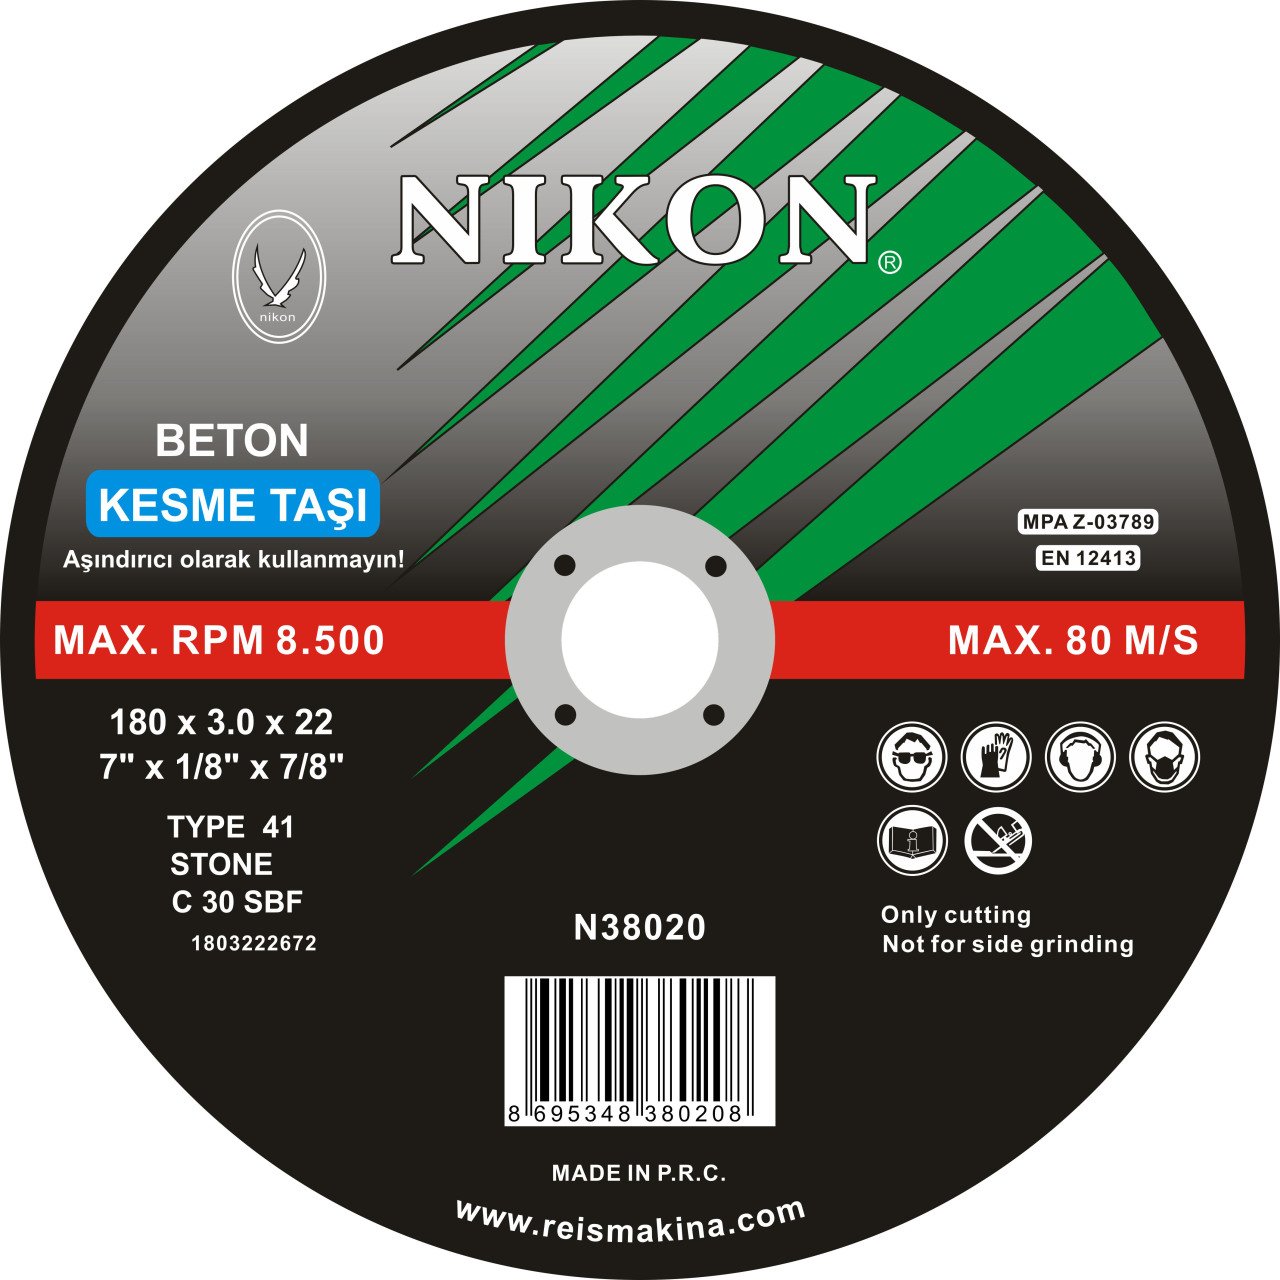 Nikon Beton Flex Kesme Taşı Bombeli 180x3.0x22mm 5 adet